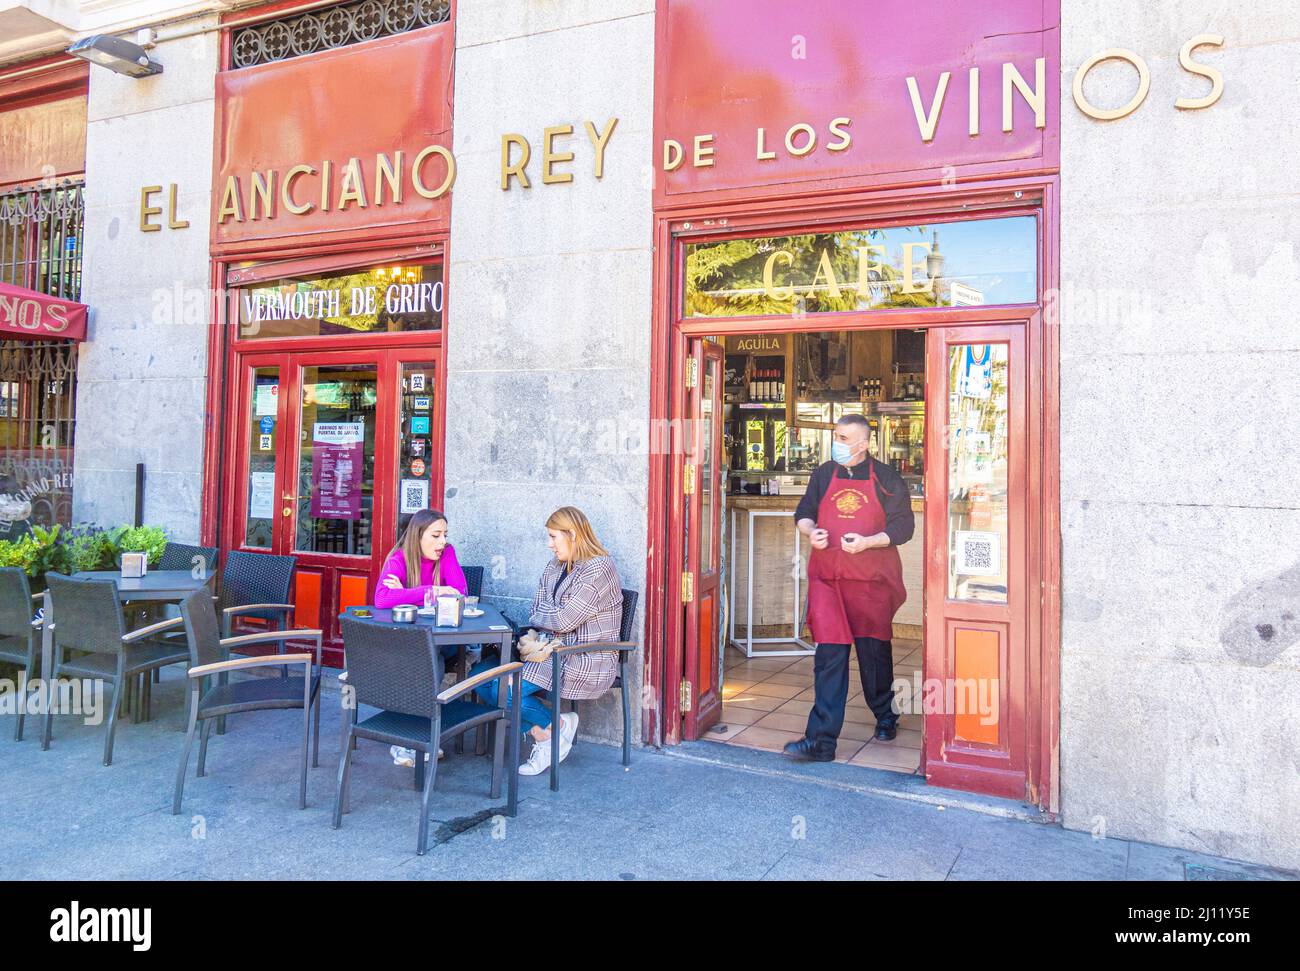 Ristorante El Anciano Rey de los Vinos taberna taverne a Centro, nel centro di Madrid, Spagna Foto Stock